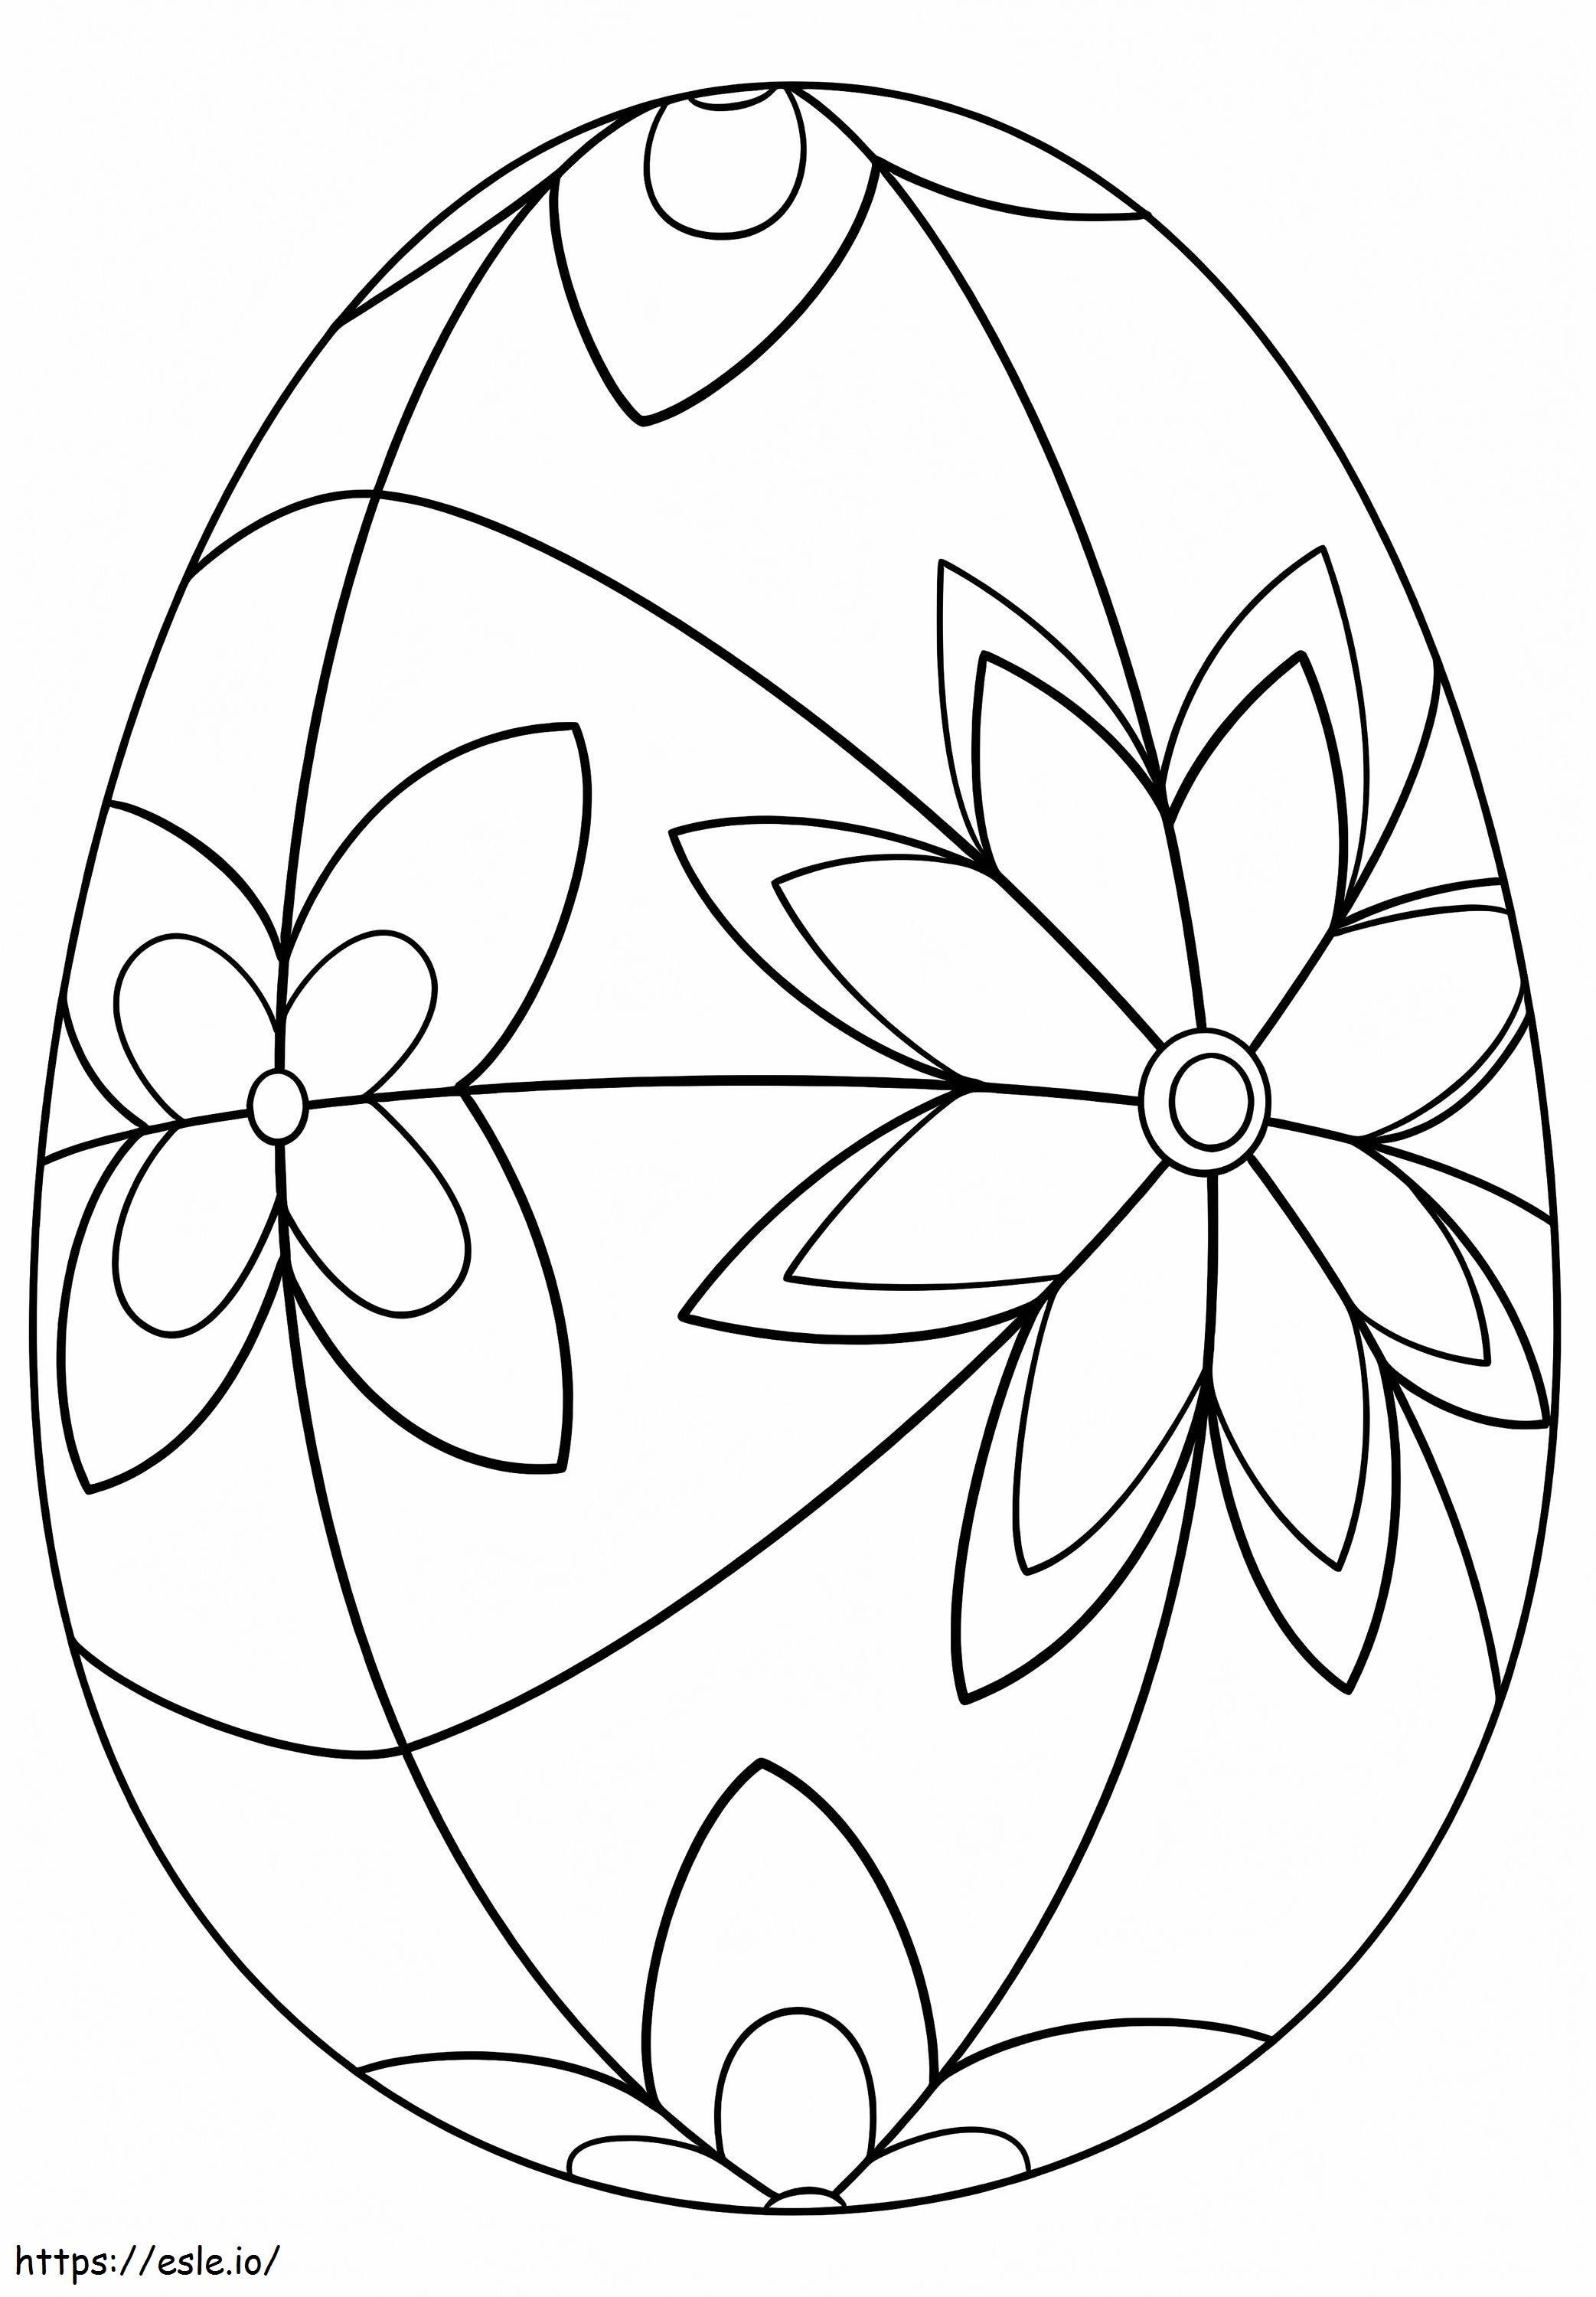 Lindo Ovo de Páscoa 3 para colorir